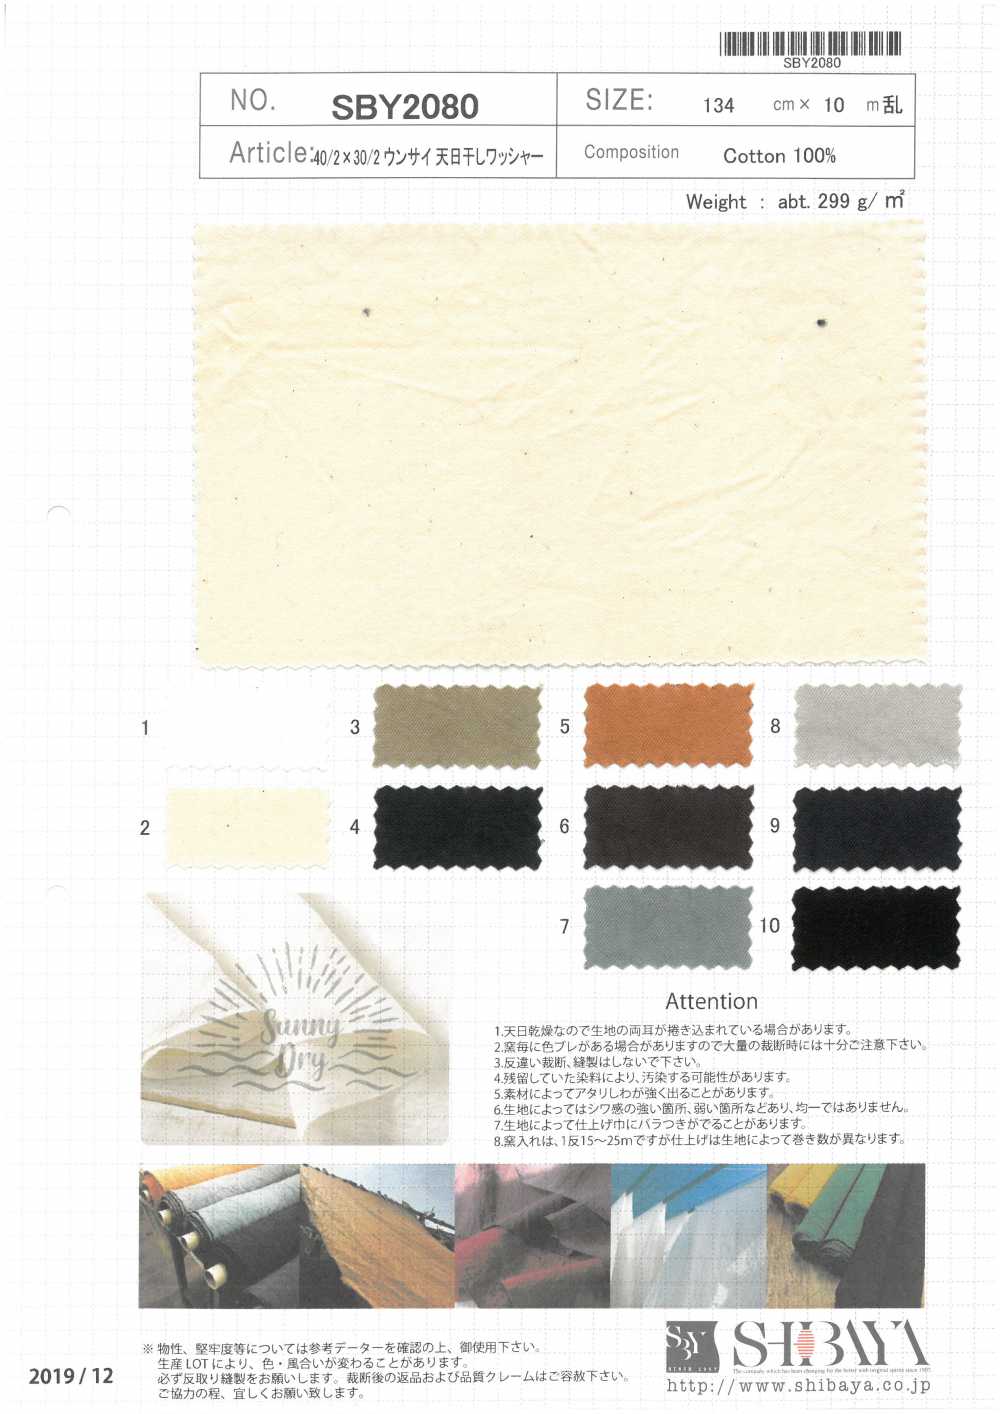 SBY2080 Lavadora Secada Al Sol 40/2 × 30/2 Unsai[Fabrica Textil] SHIBAYA